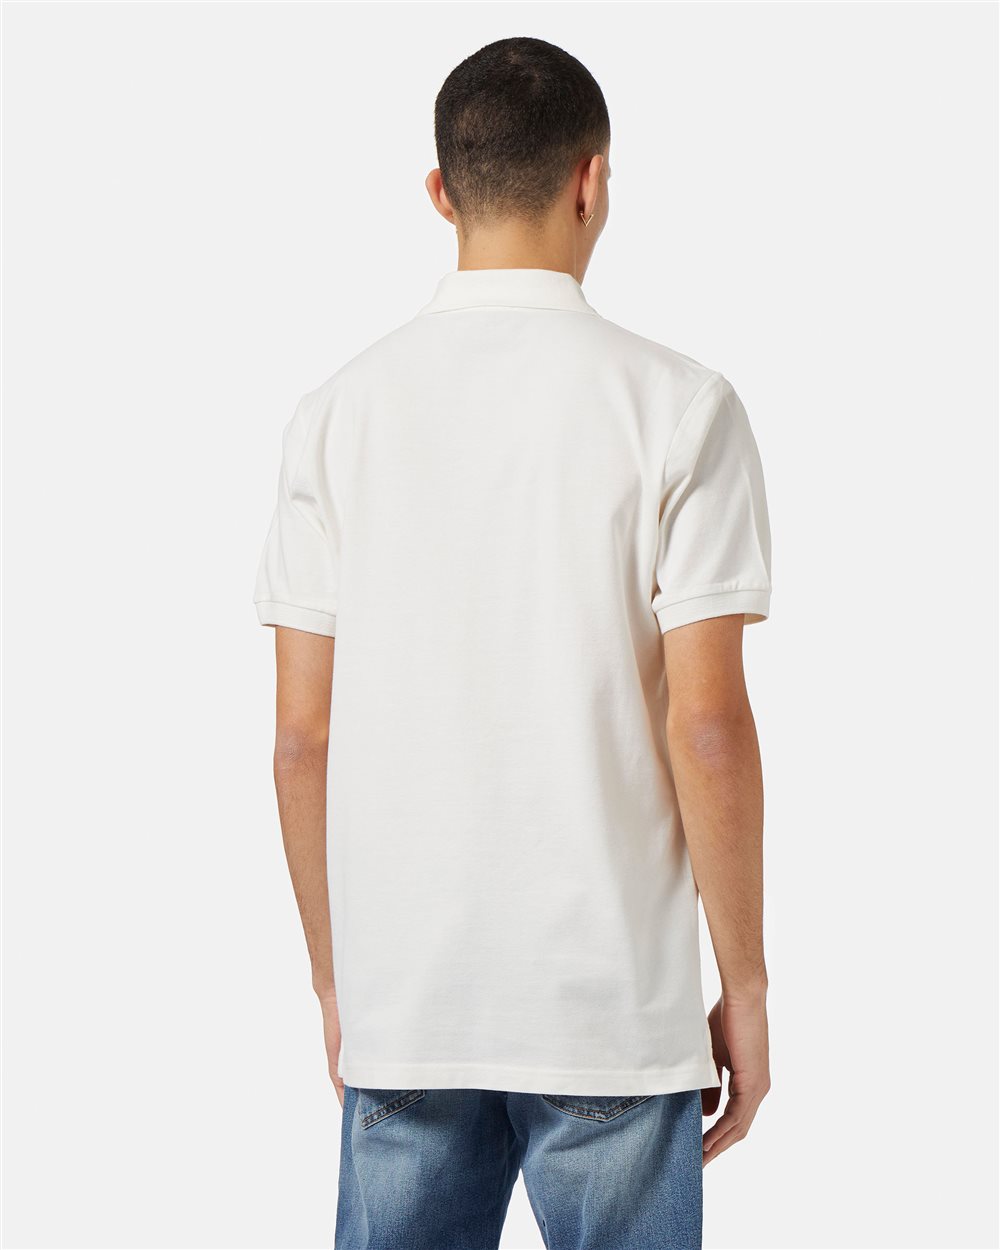 Polo shirt with logo - Iceberg - Official Website